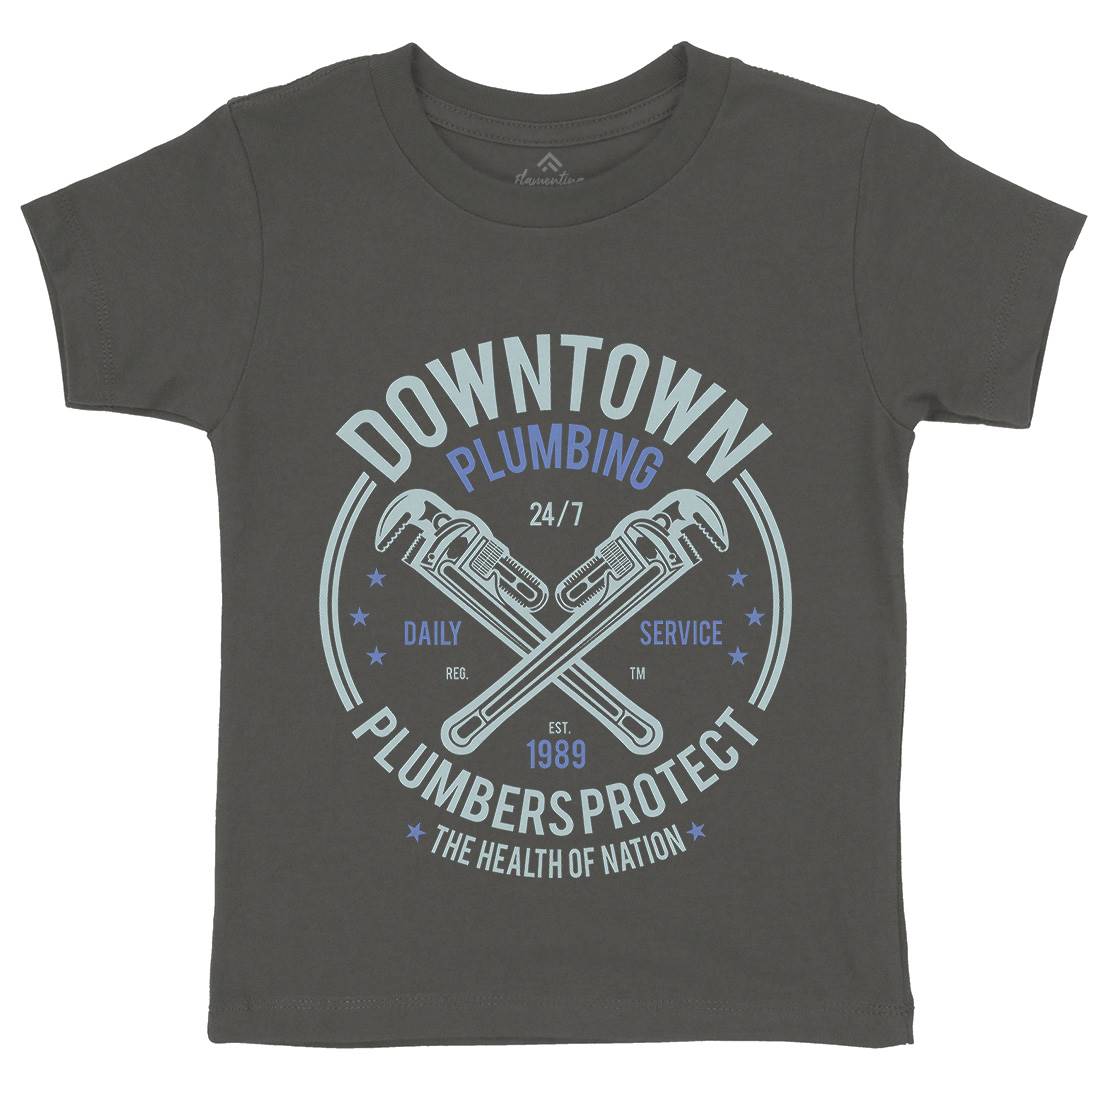 Downtown Plumbing Kids Organic Crew Neck T-Shirt Work A046